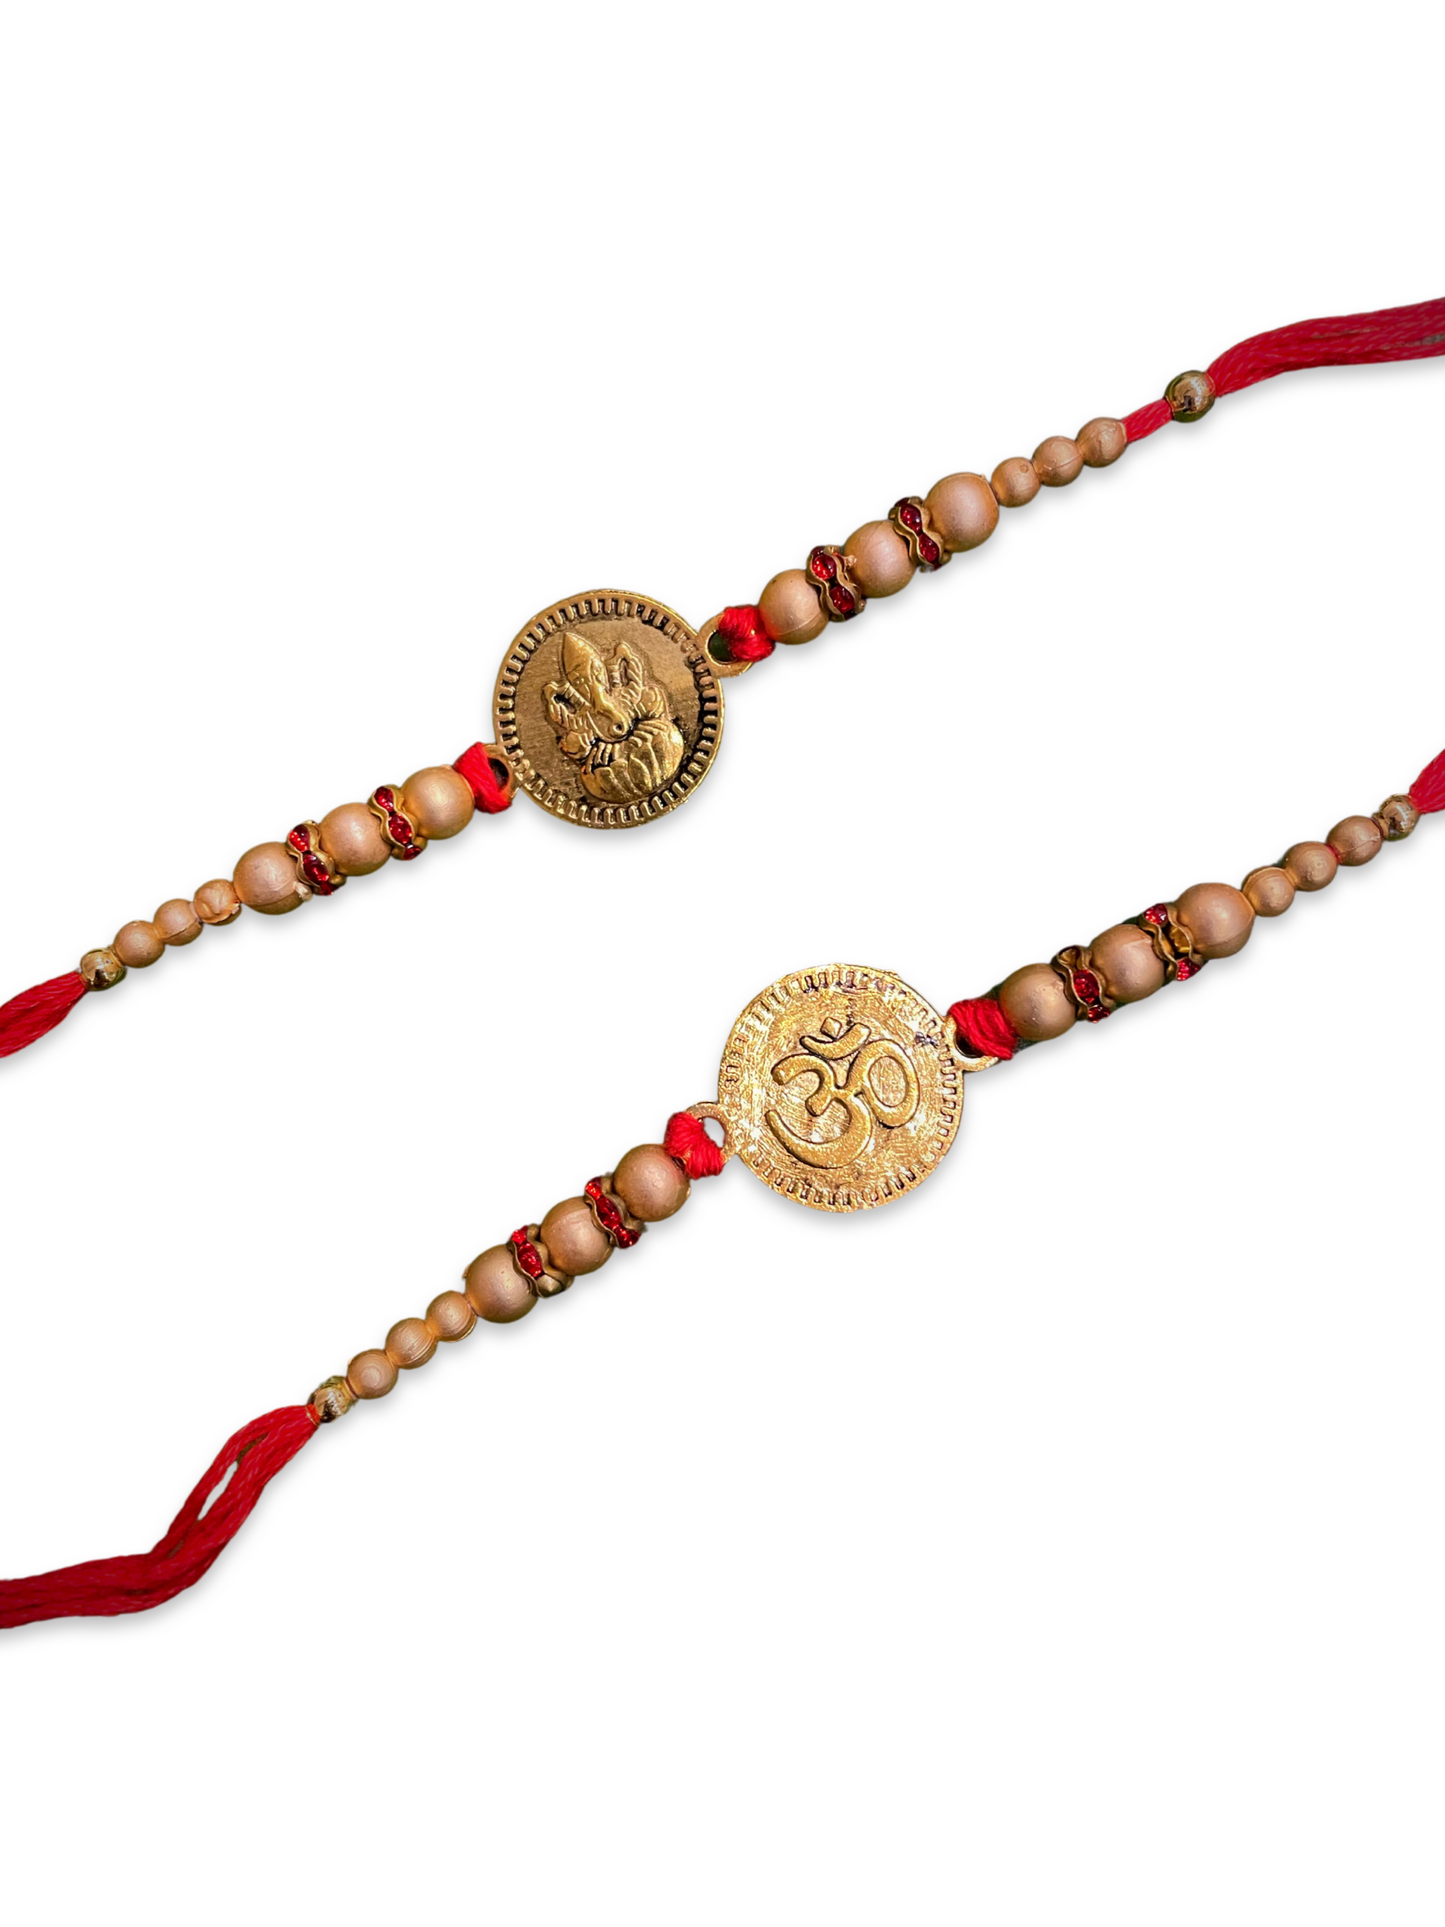 (Combo of 2) Fancy Rakhi Designs OM/Ganesha Engraved Coins Pendant Gold Beads Mauli Raksha Bandhan